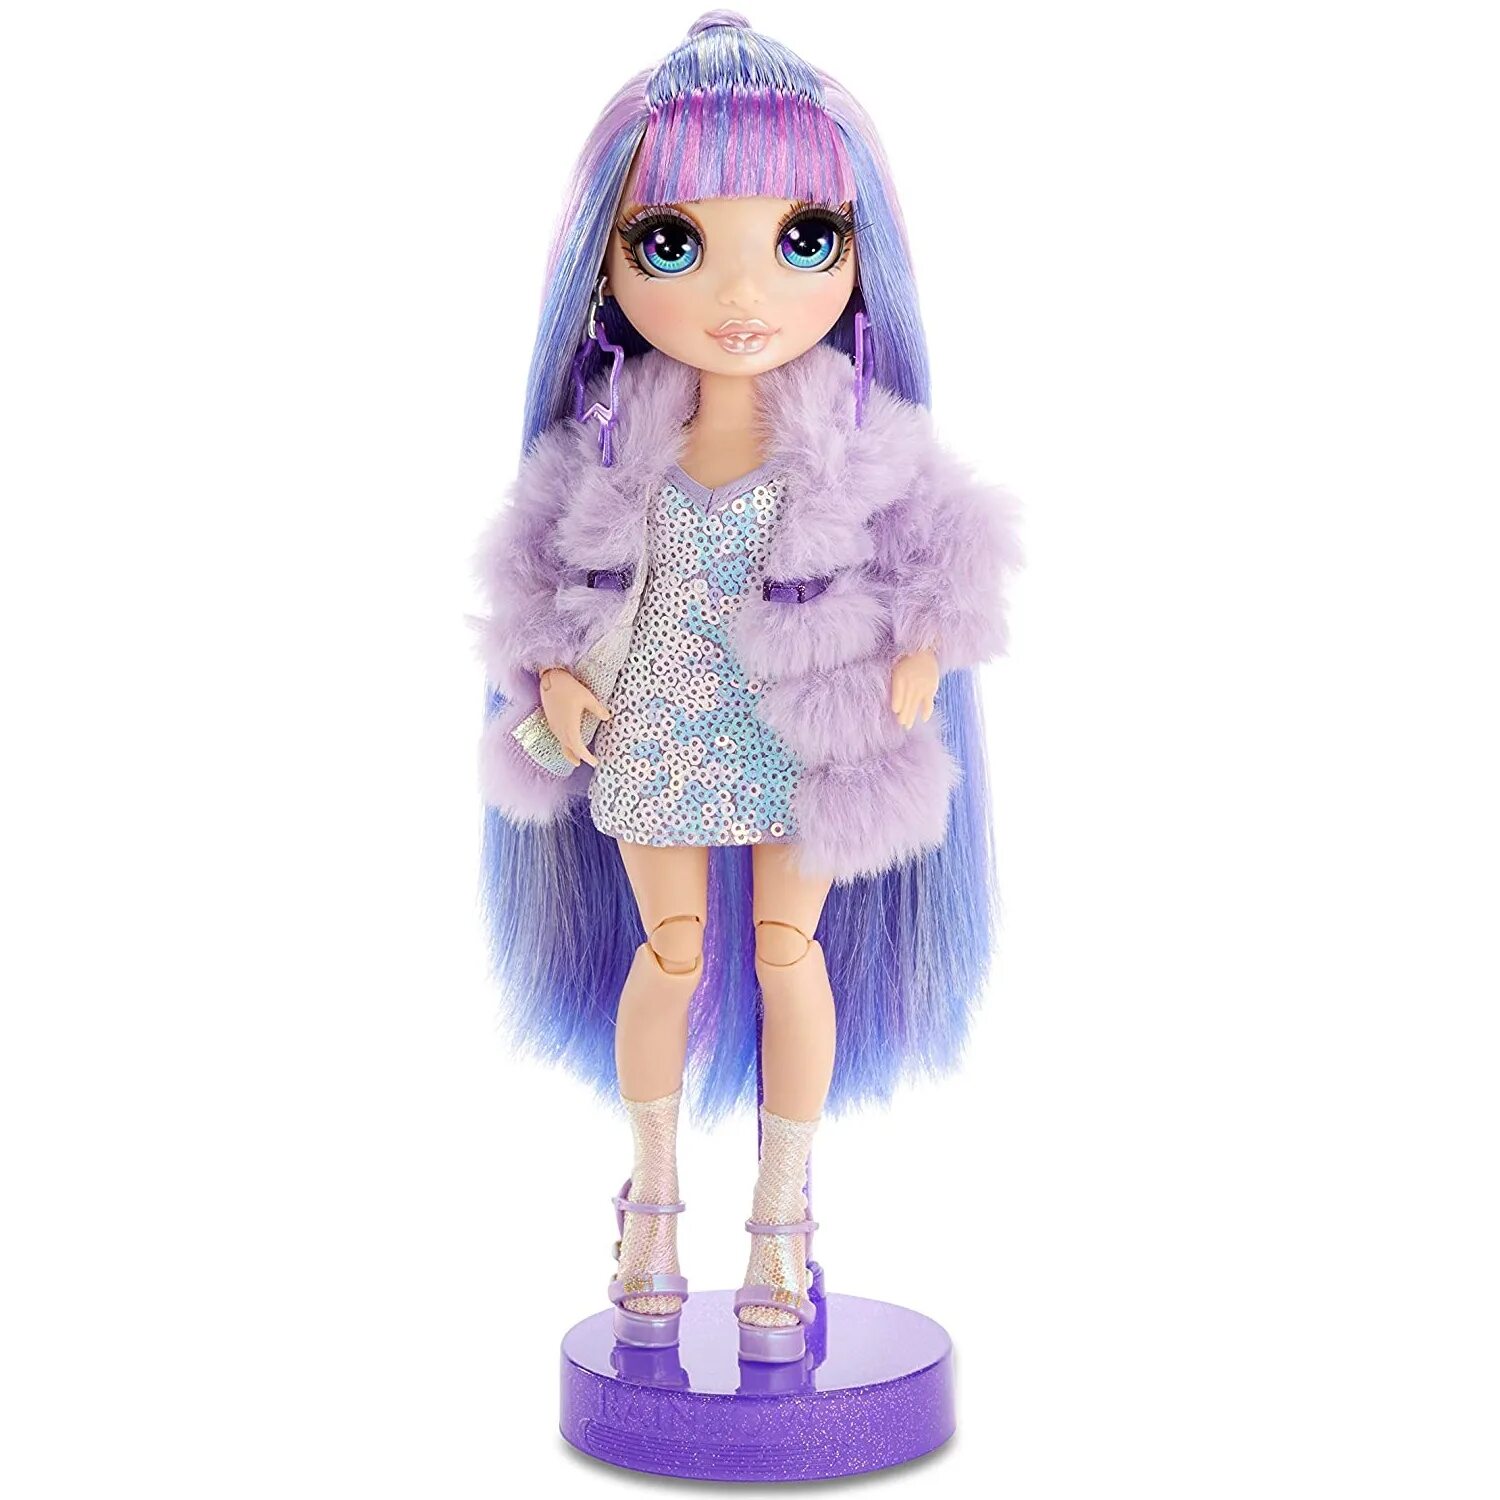 Кукла Rainbow High Violet Willow. Rainbow High 569602 кукла Violet Willows. Кукла Rainbow High Violet Willow, 28 см 569602.